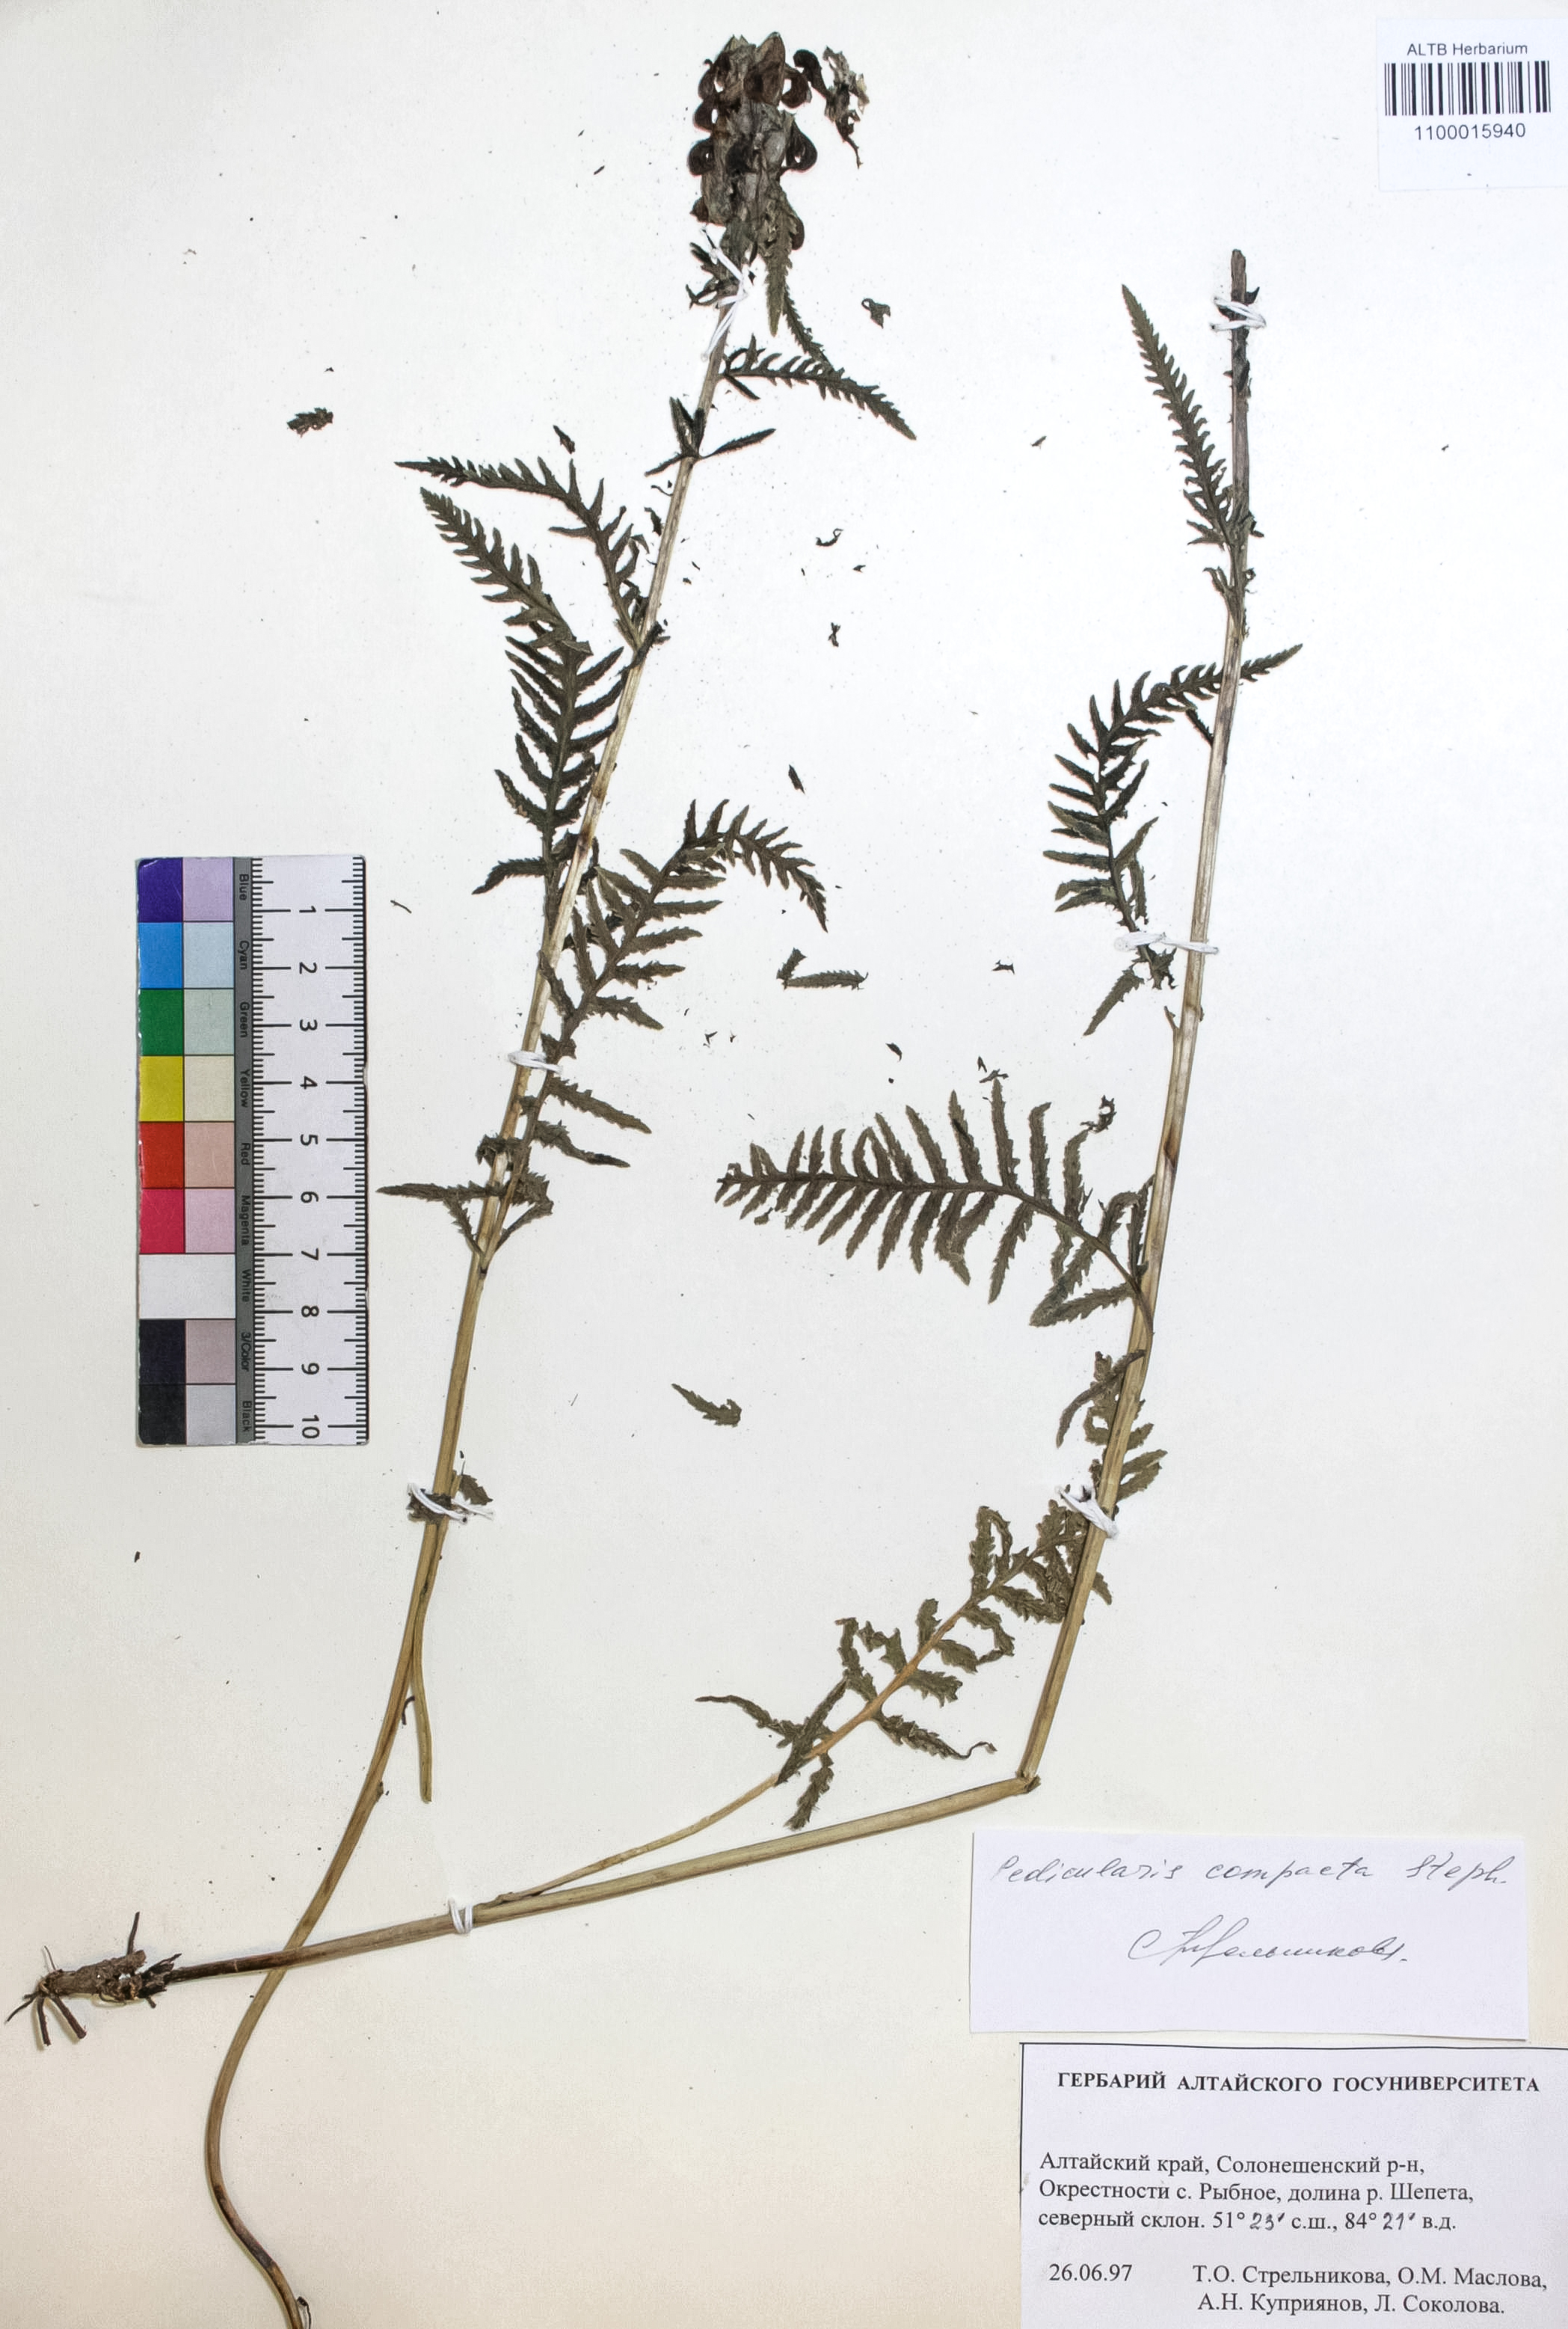 Pedicularis compacta Stephan